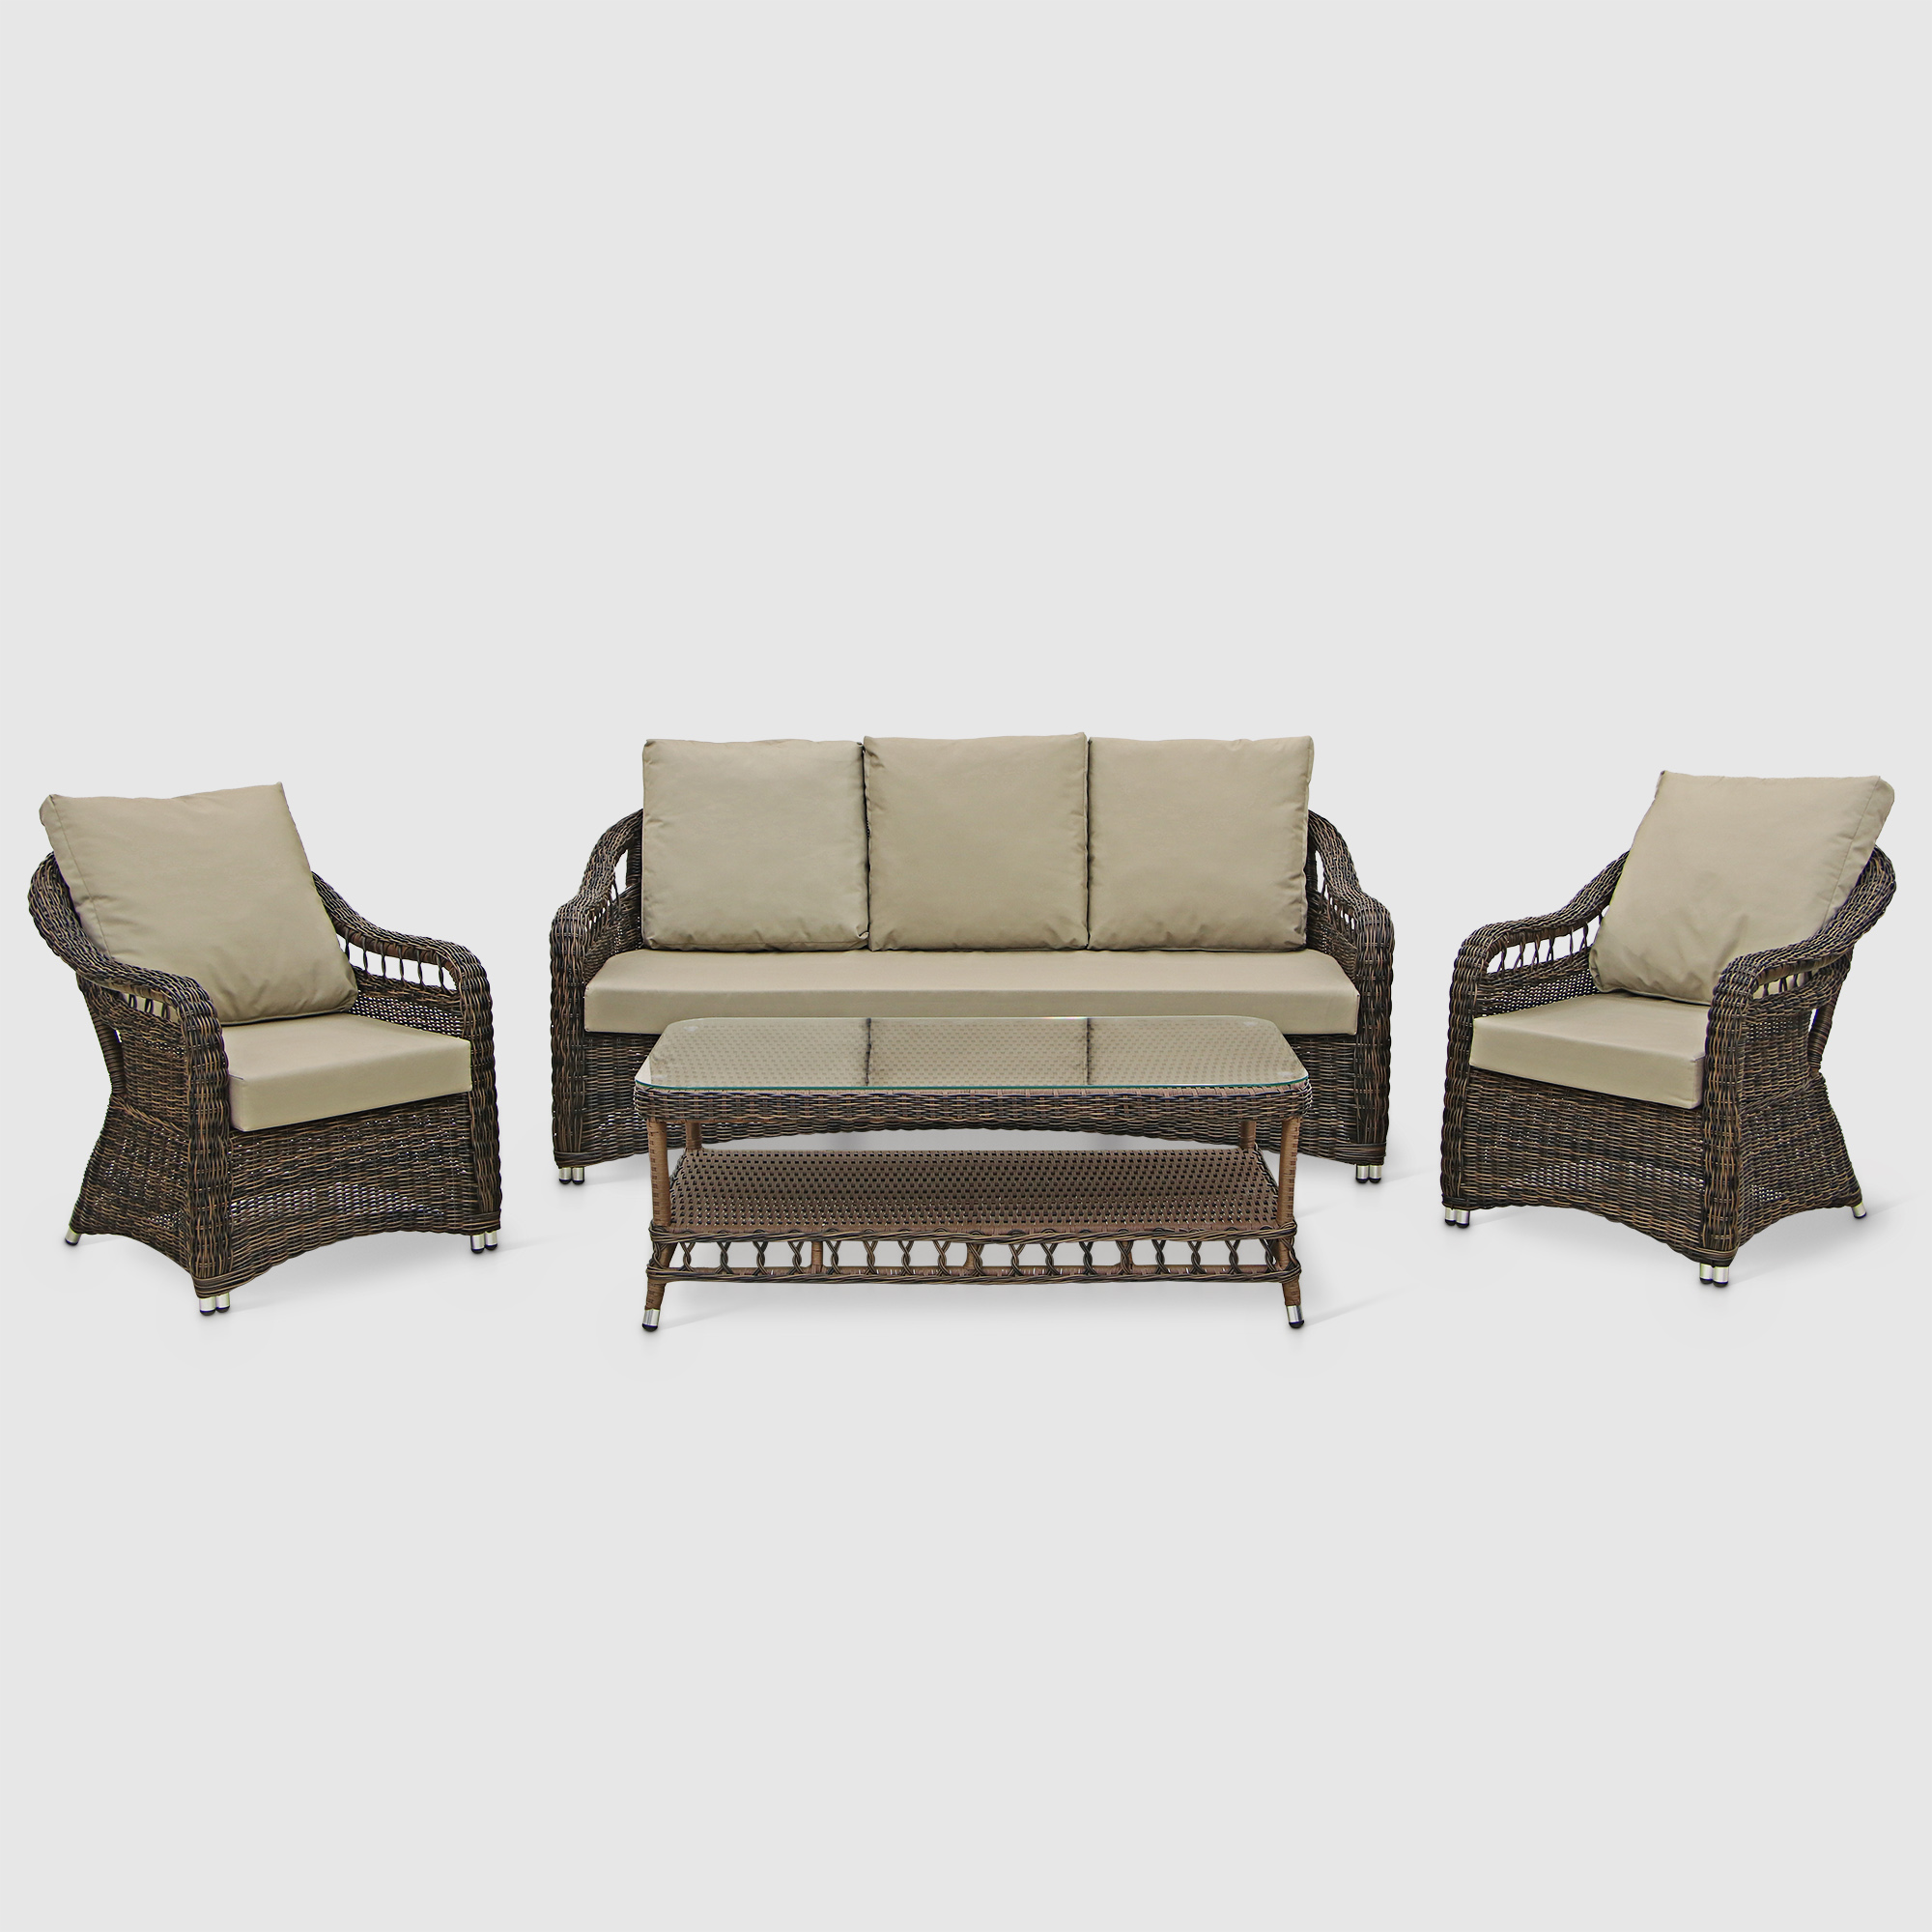 Комплект мебели NS Rattan Sky коричневый с бежевым 4 предмета, цвет бежевый, размер 180х78х78 - фото 1